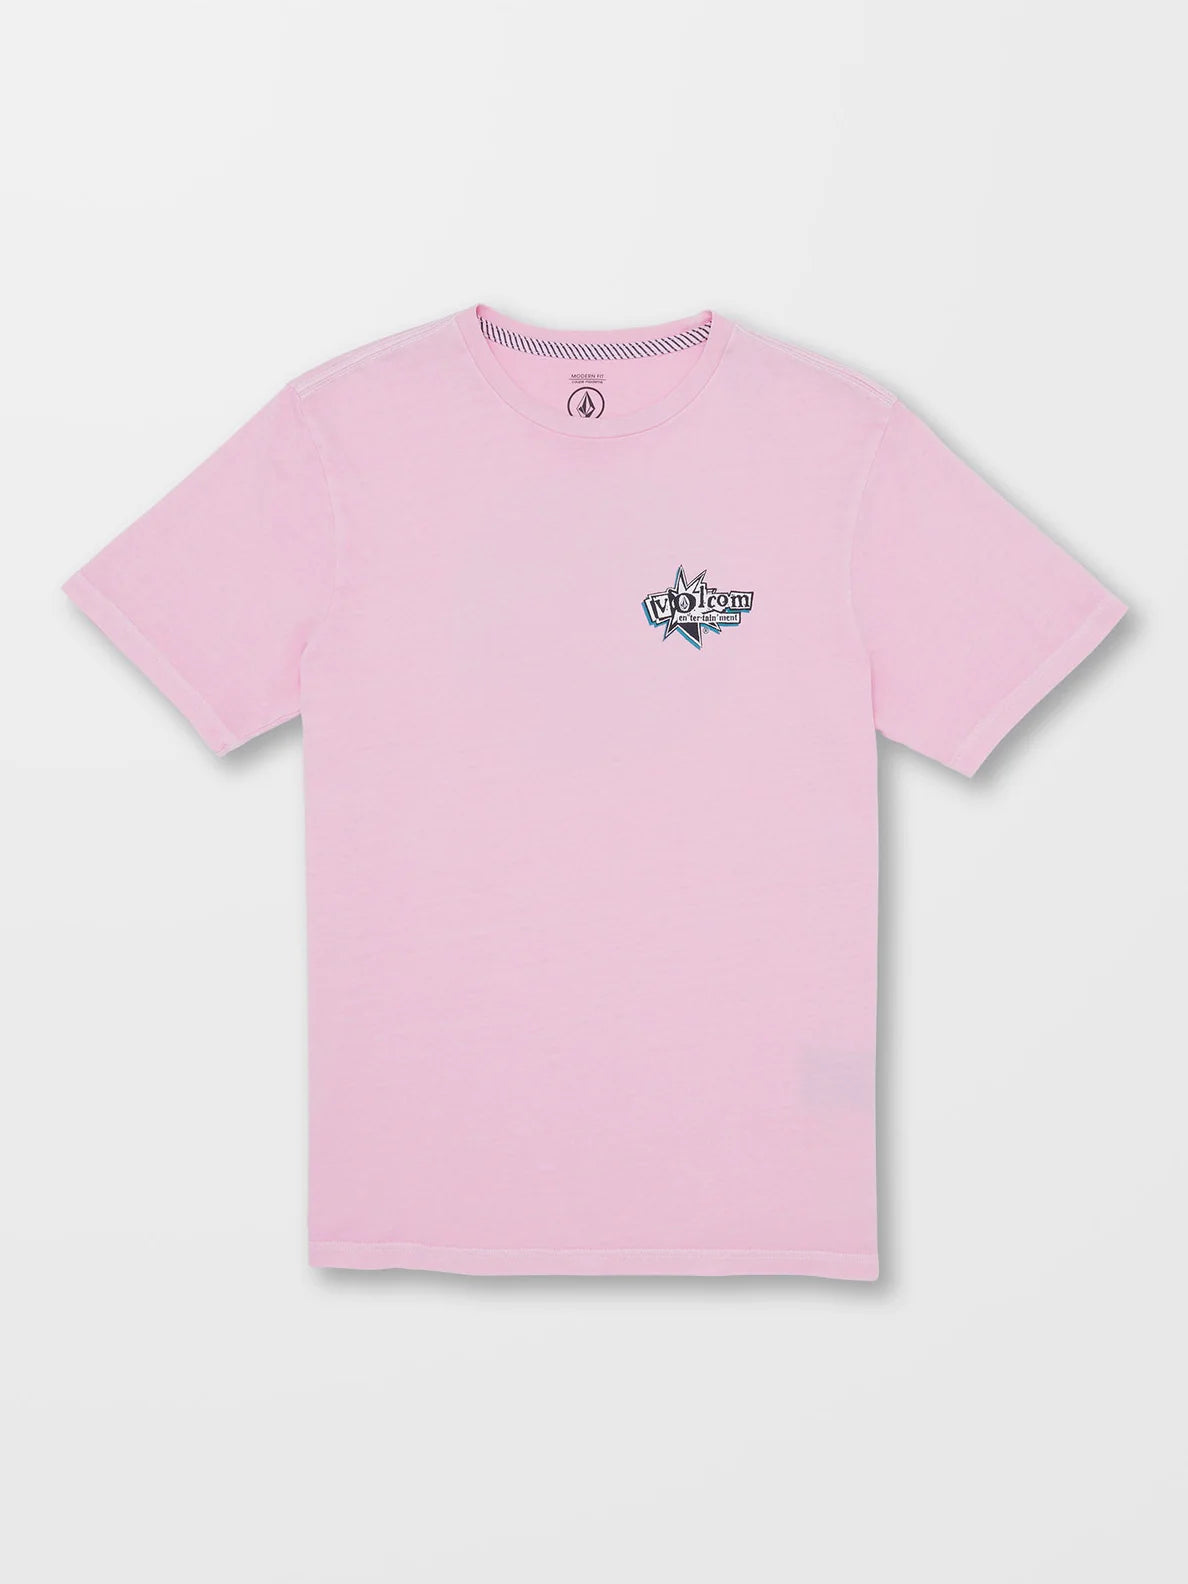 Camiseta Volcom V Entertainment Reef Pink